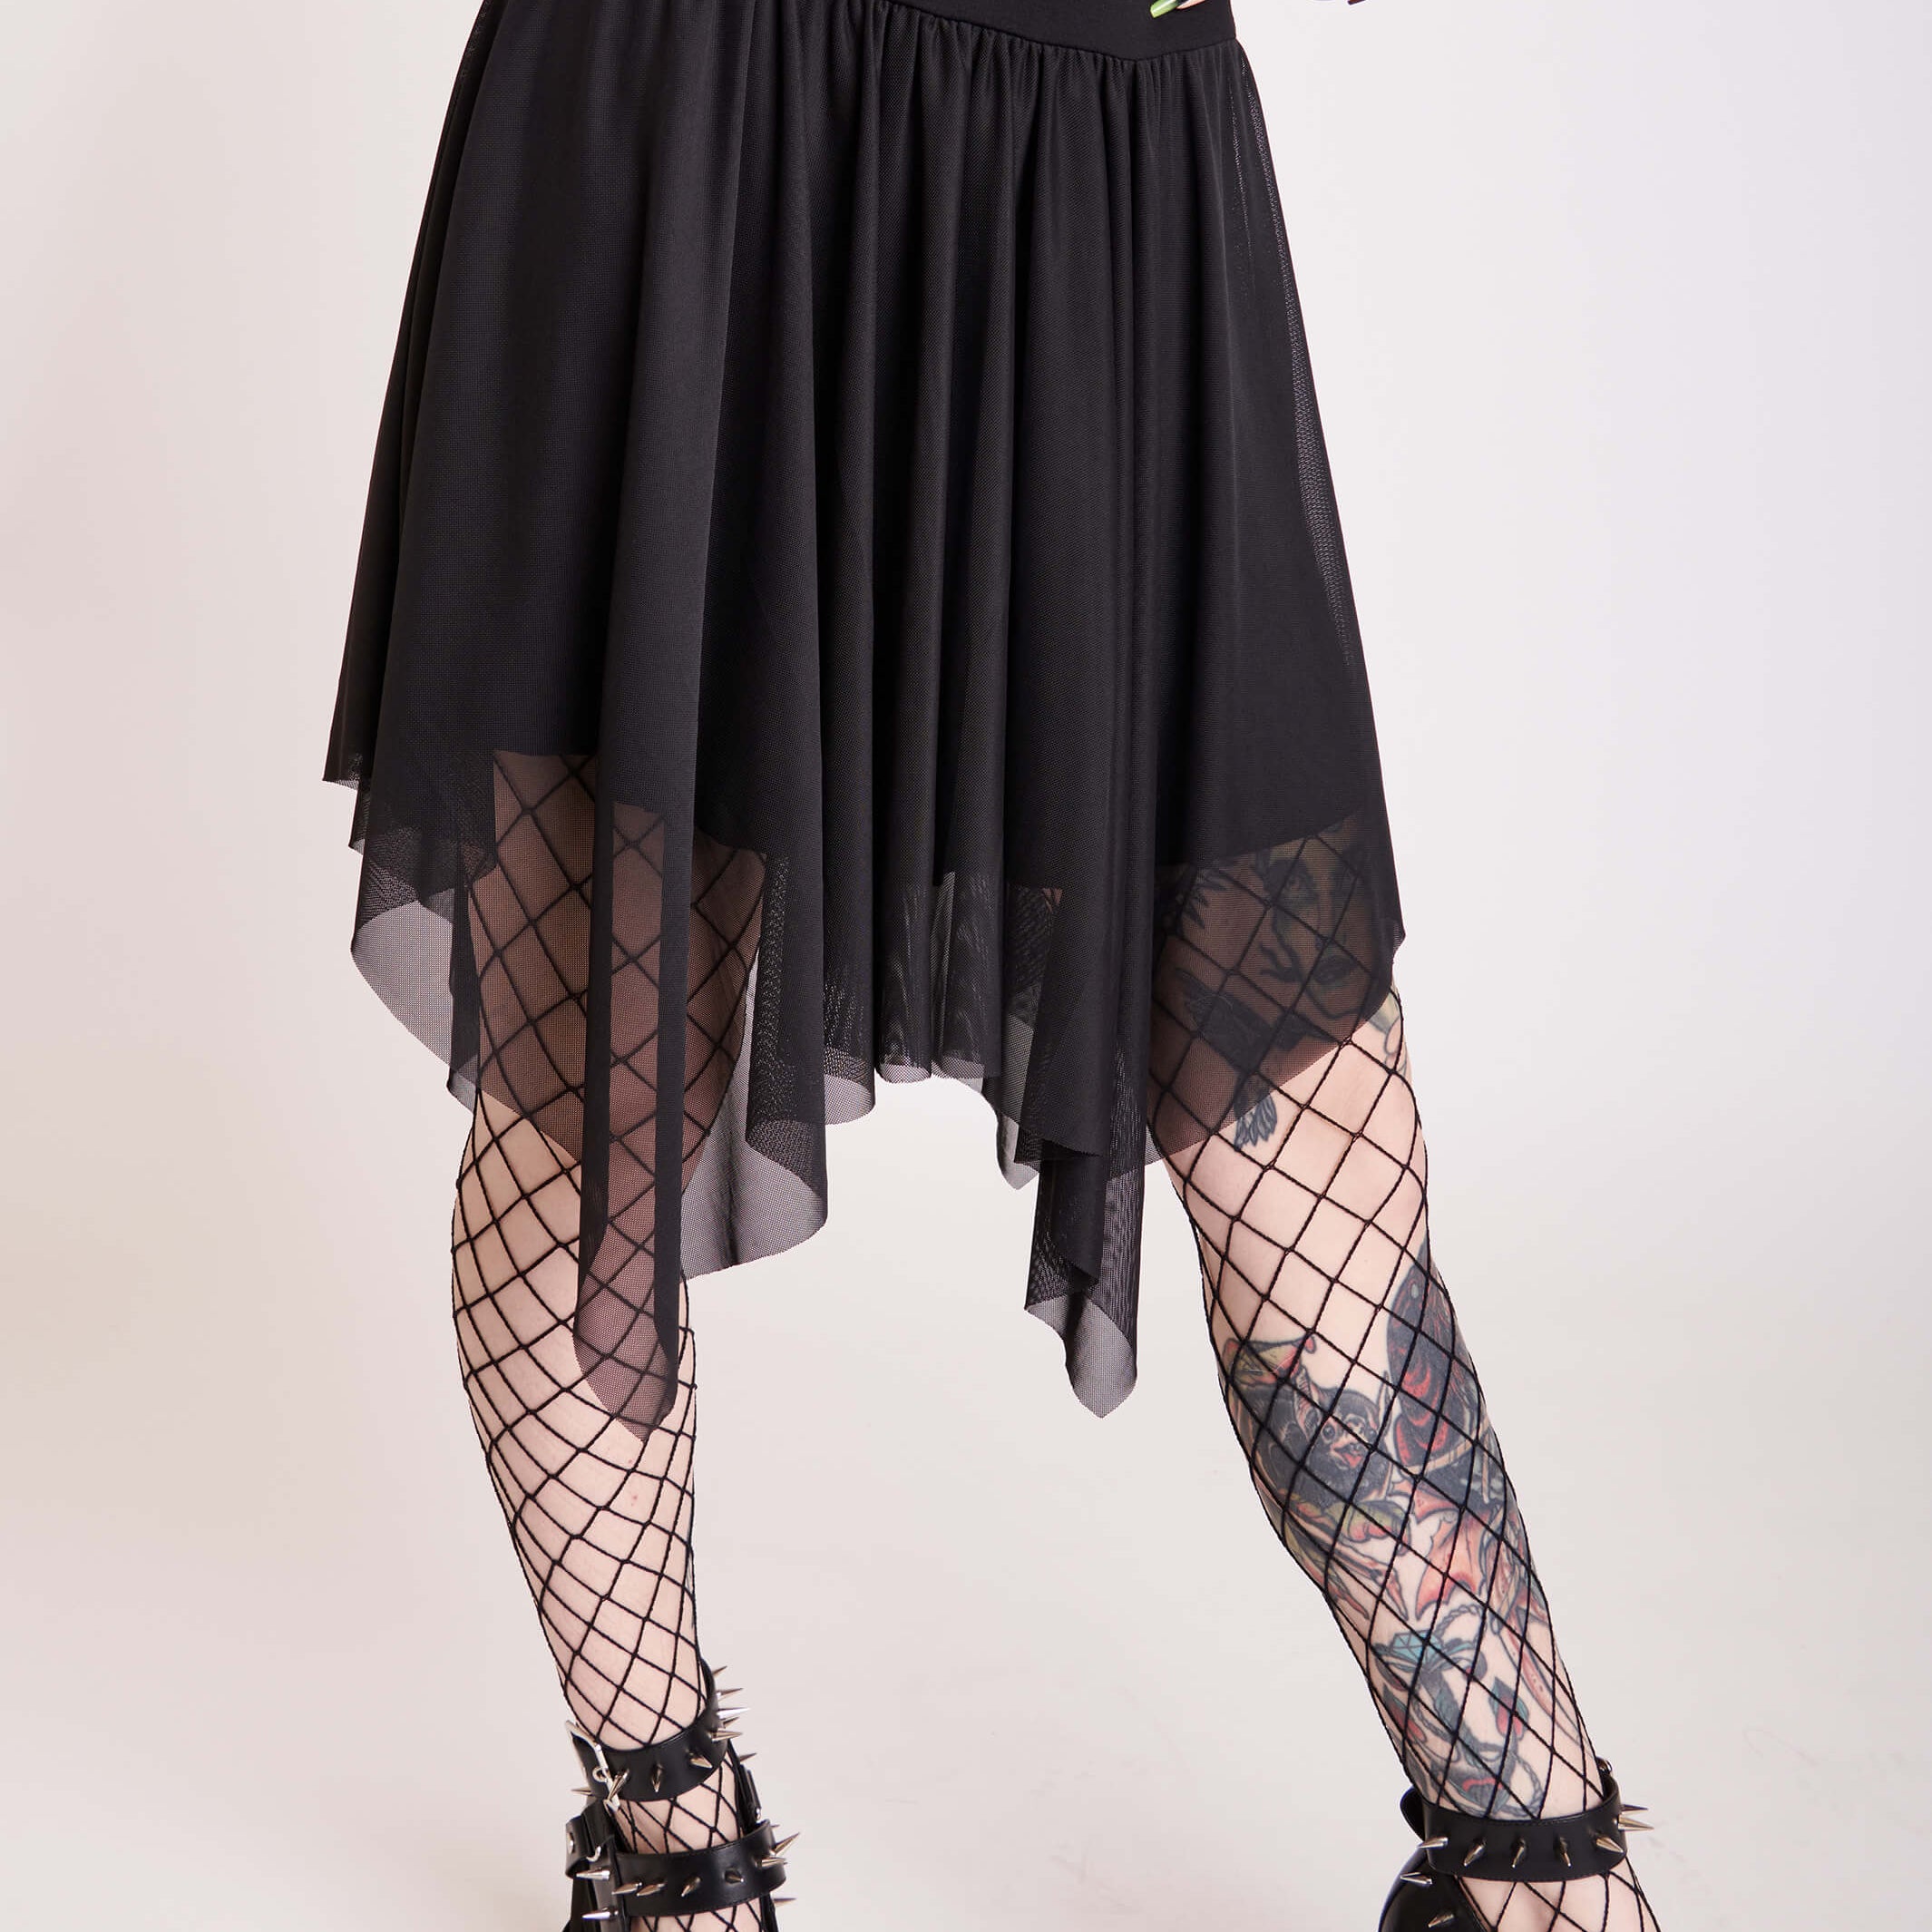 Mesh knit dark fairy assymetrical hem black skirt